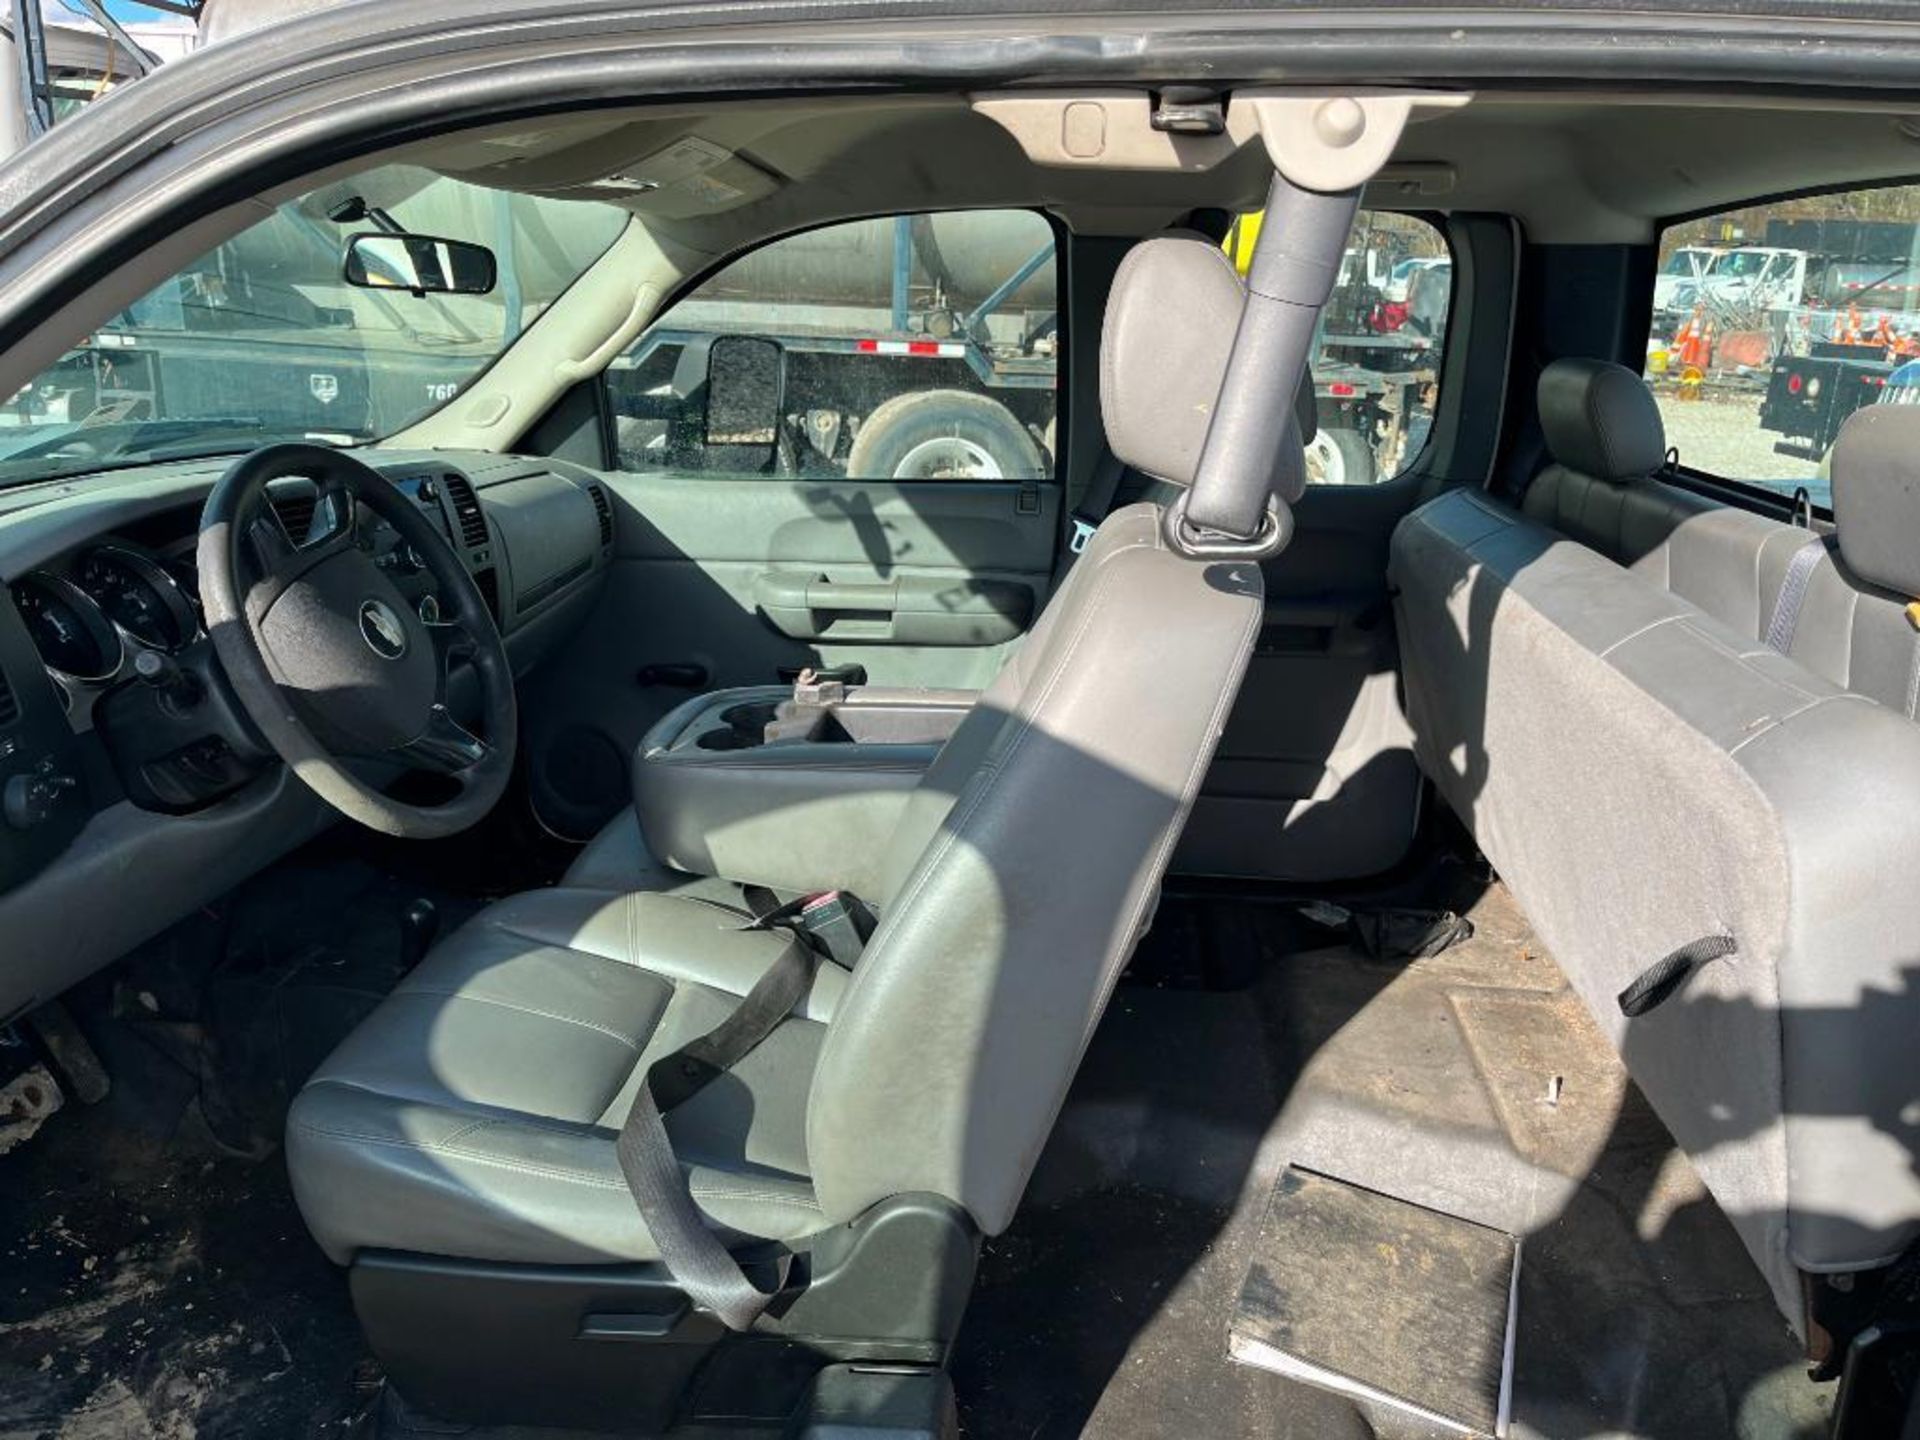 2008 Chevrolet 2500 HD WT Quad Cab Pickup, 4-Wheel Drive, 202,349 Miles, VIN GCHK29K88E178704, Unit - Image 5 of 5